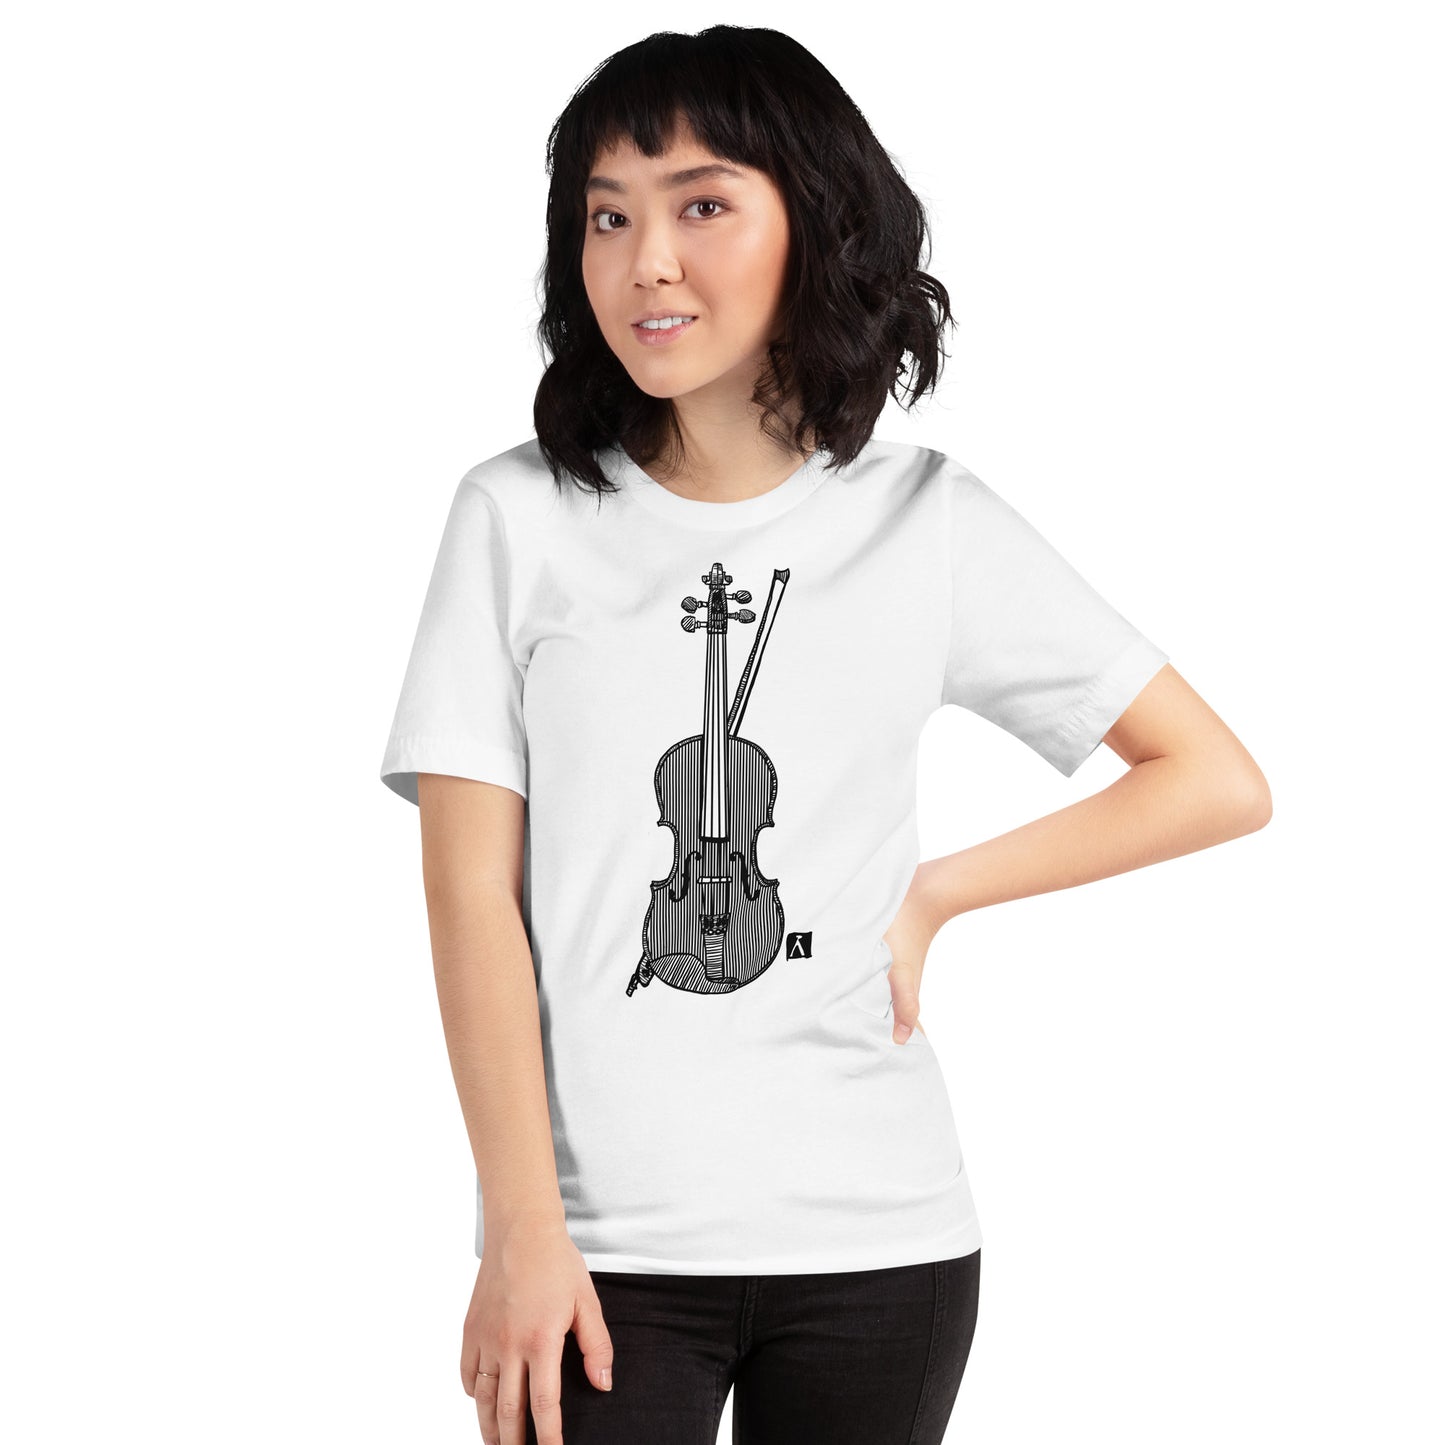 BellavanceInk: Pen And Ink Illustration Of A Fiddle/Violin On A Short Sleeve T-Shirt